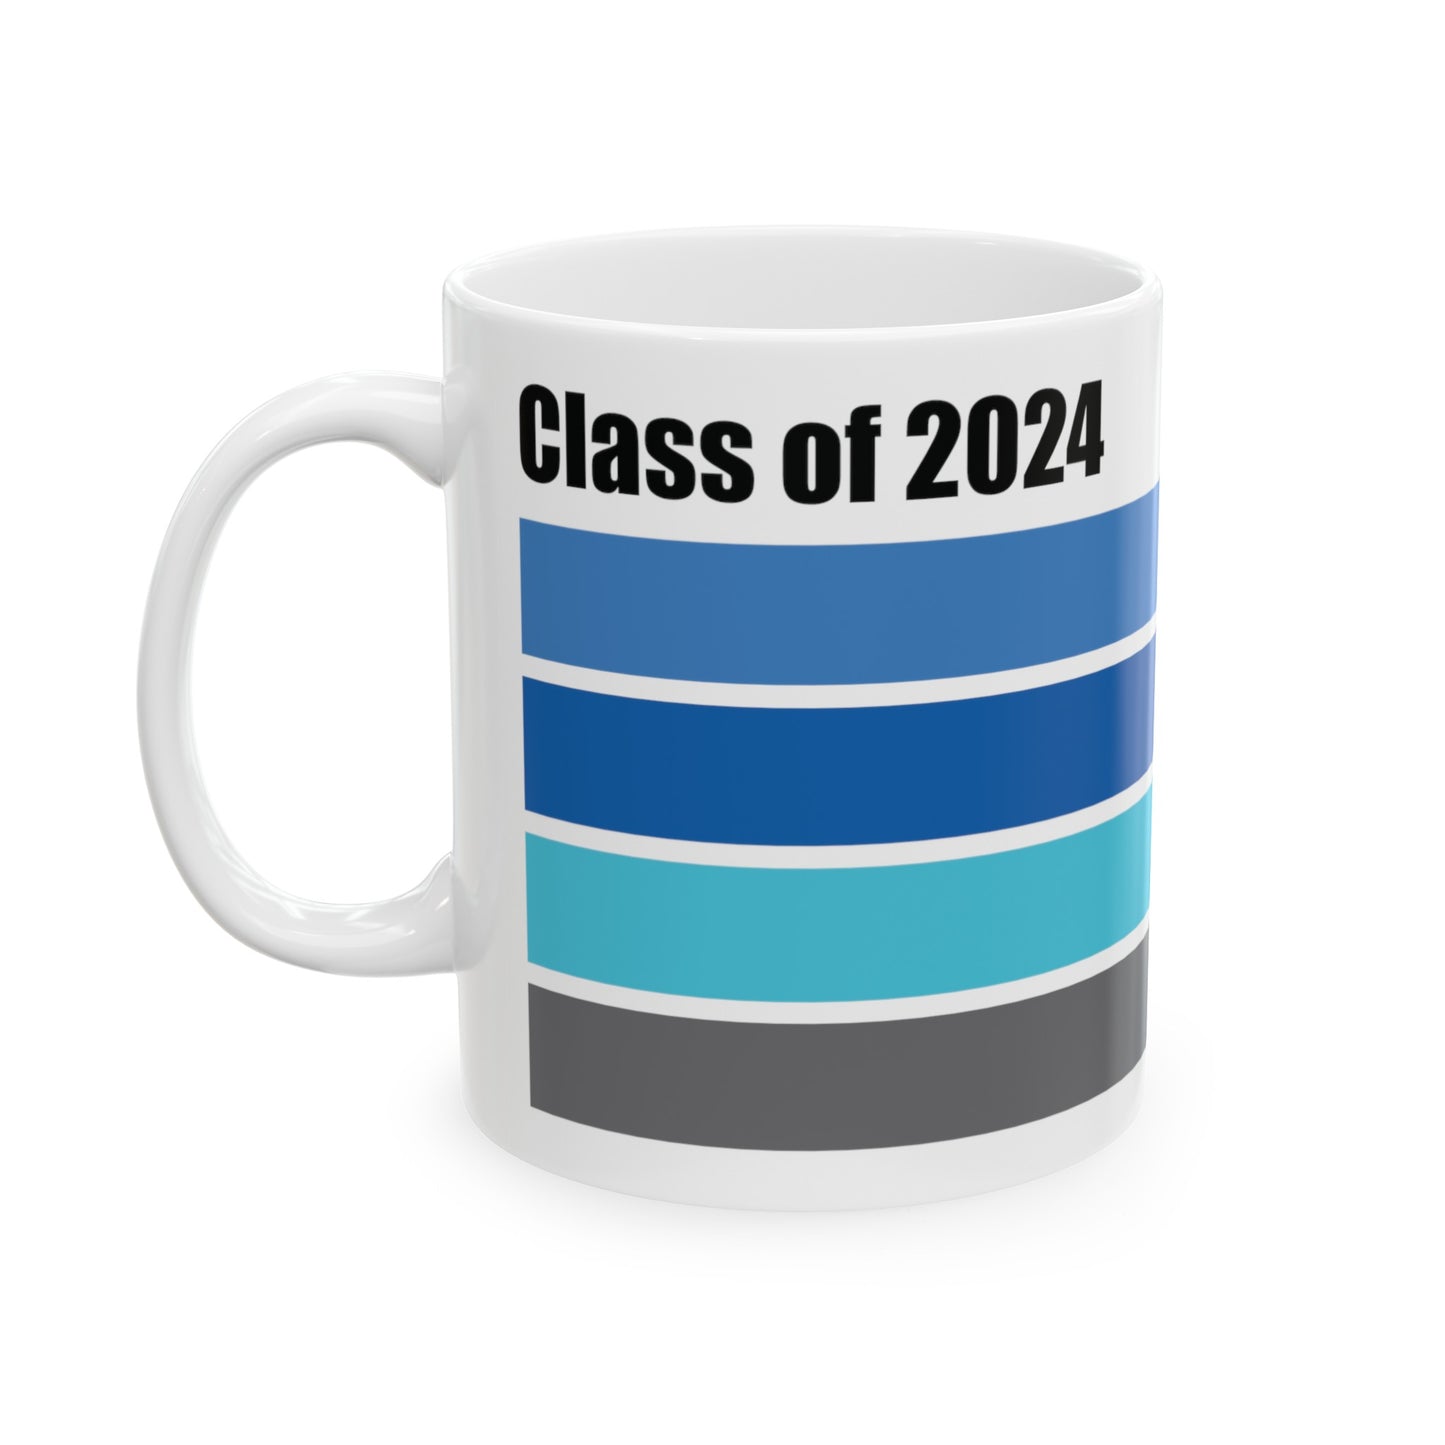 Graduation Mug, Class of 2024, Graduation Gift, College Graduation, Bachelor of Science, Gift for granddaughter, daughter, grandson